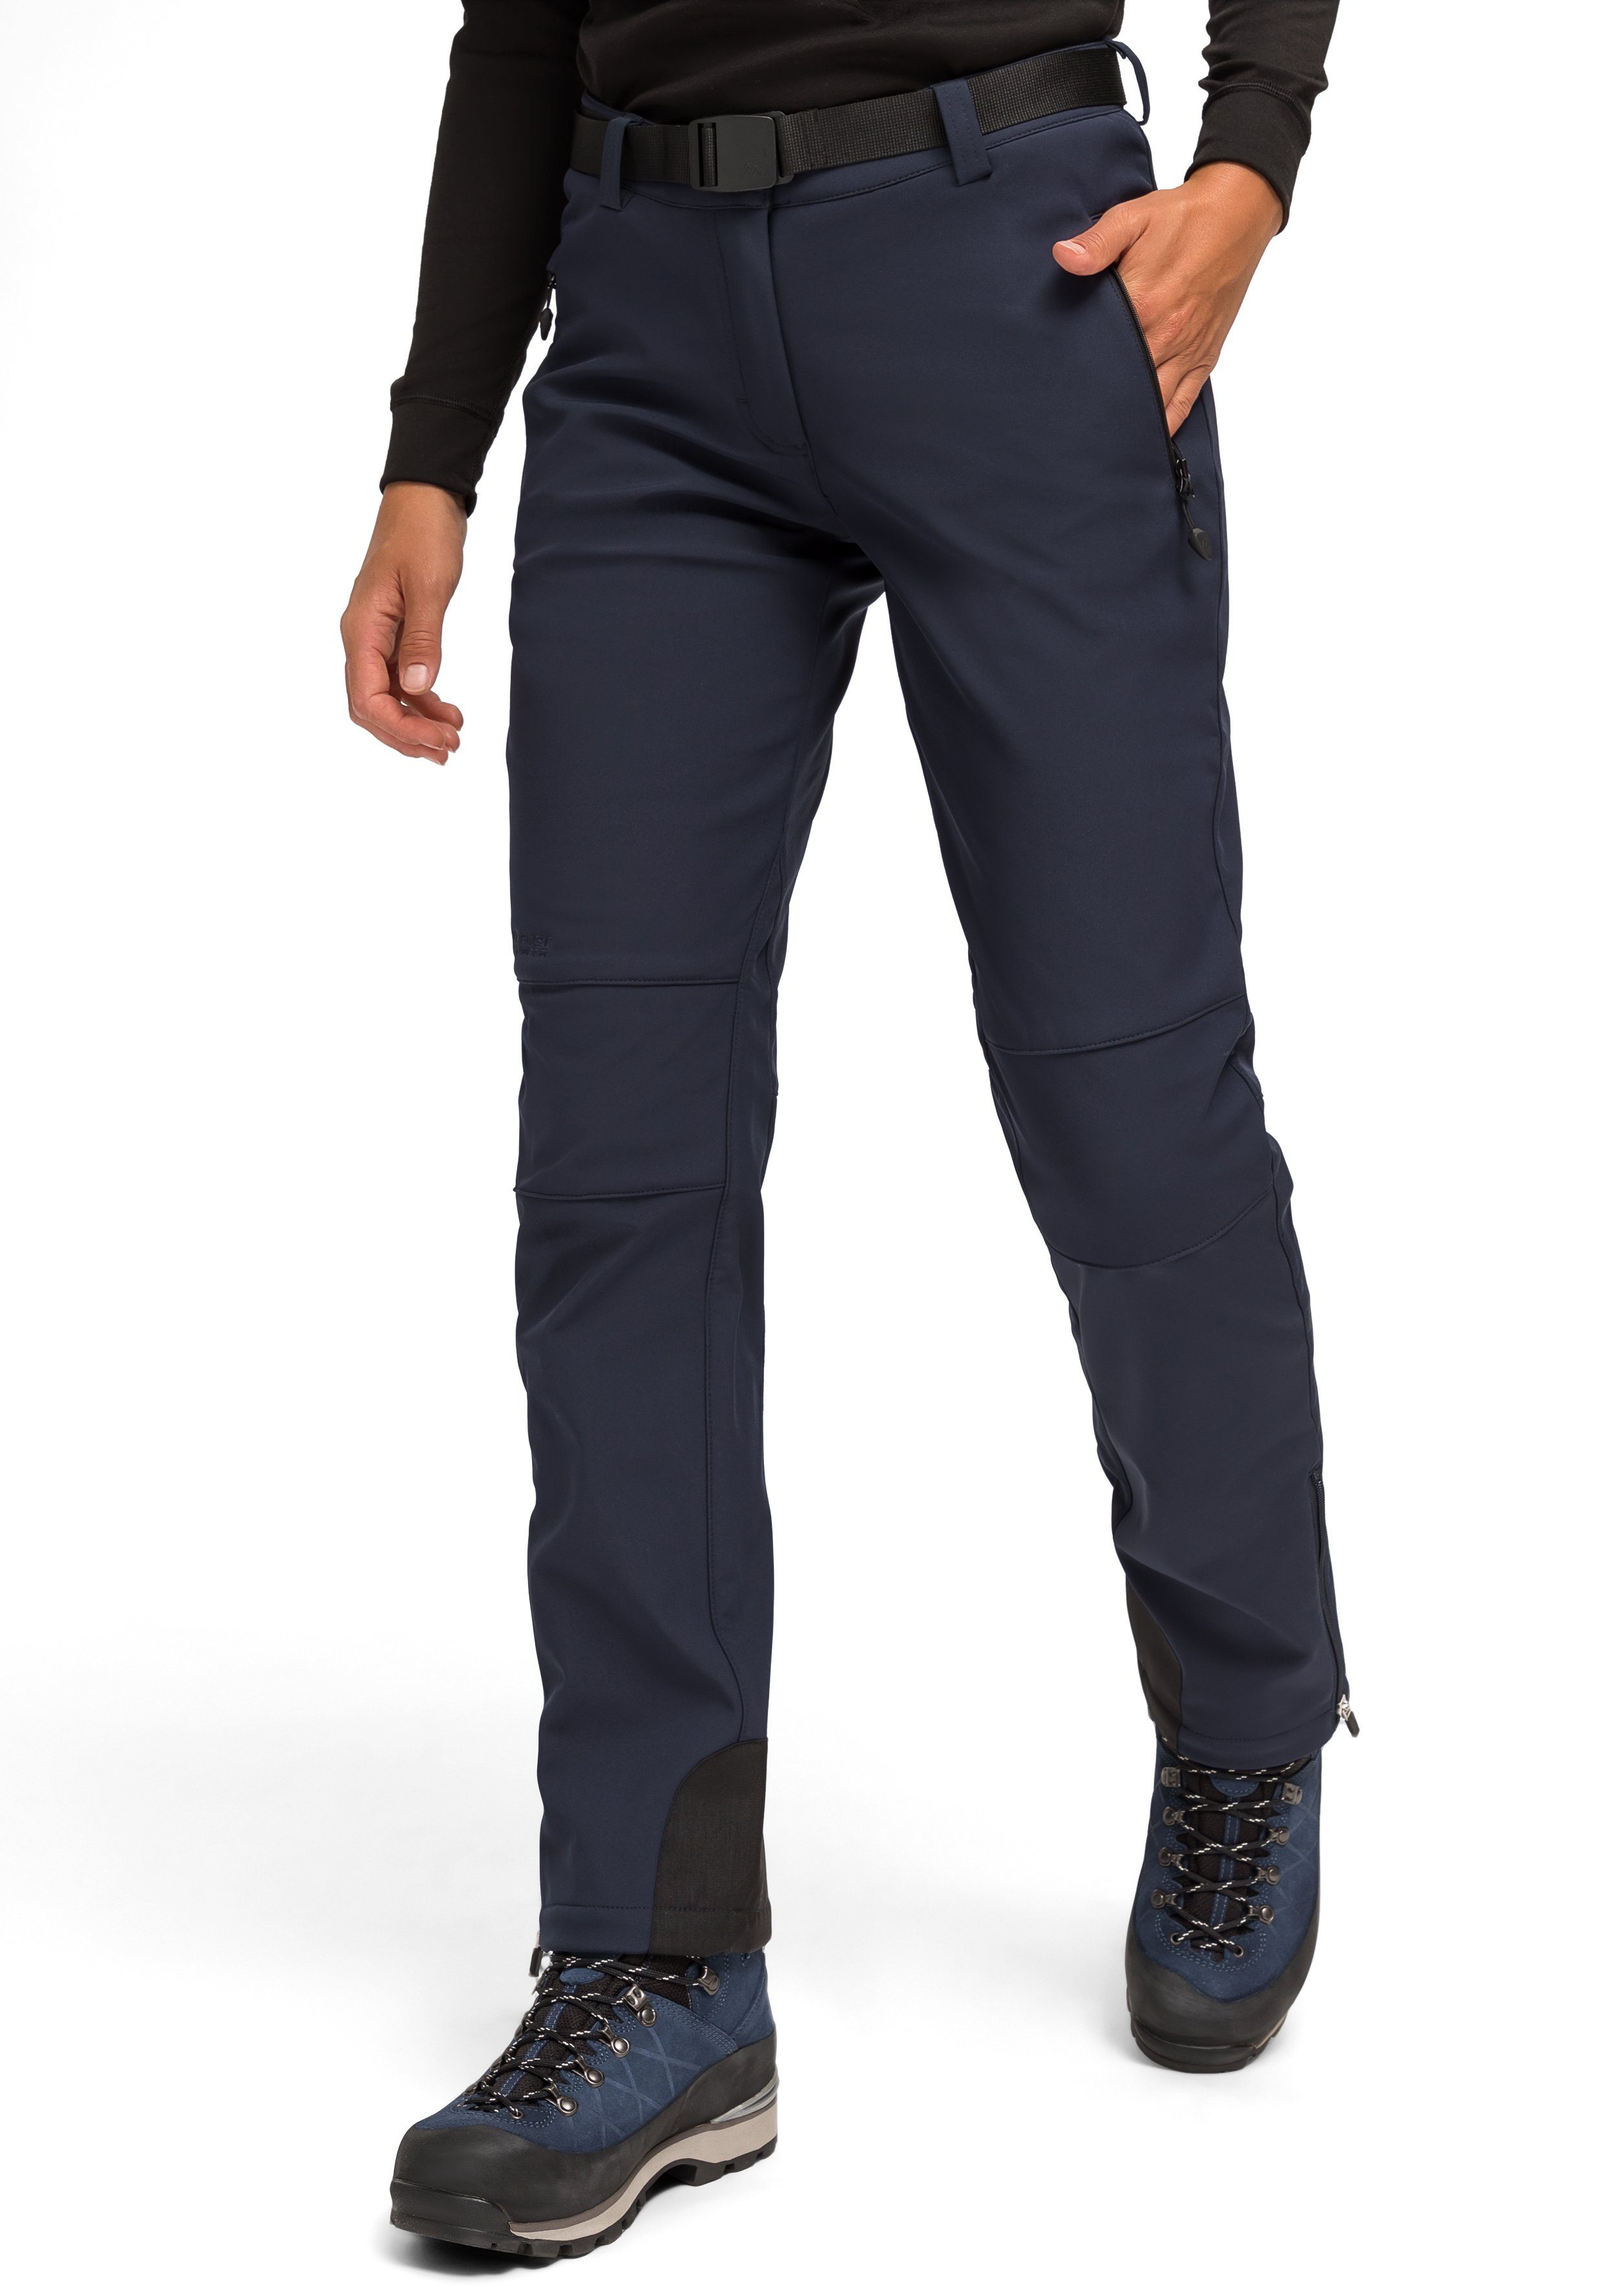 Warme Pants Funktionshose W Tech und winddicht Maier Softshellhose, elastisch Sports dunkelblau